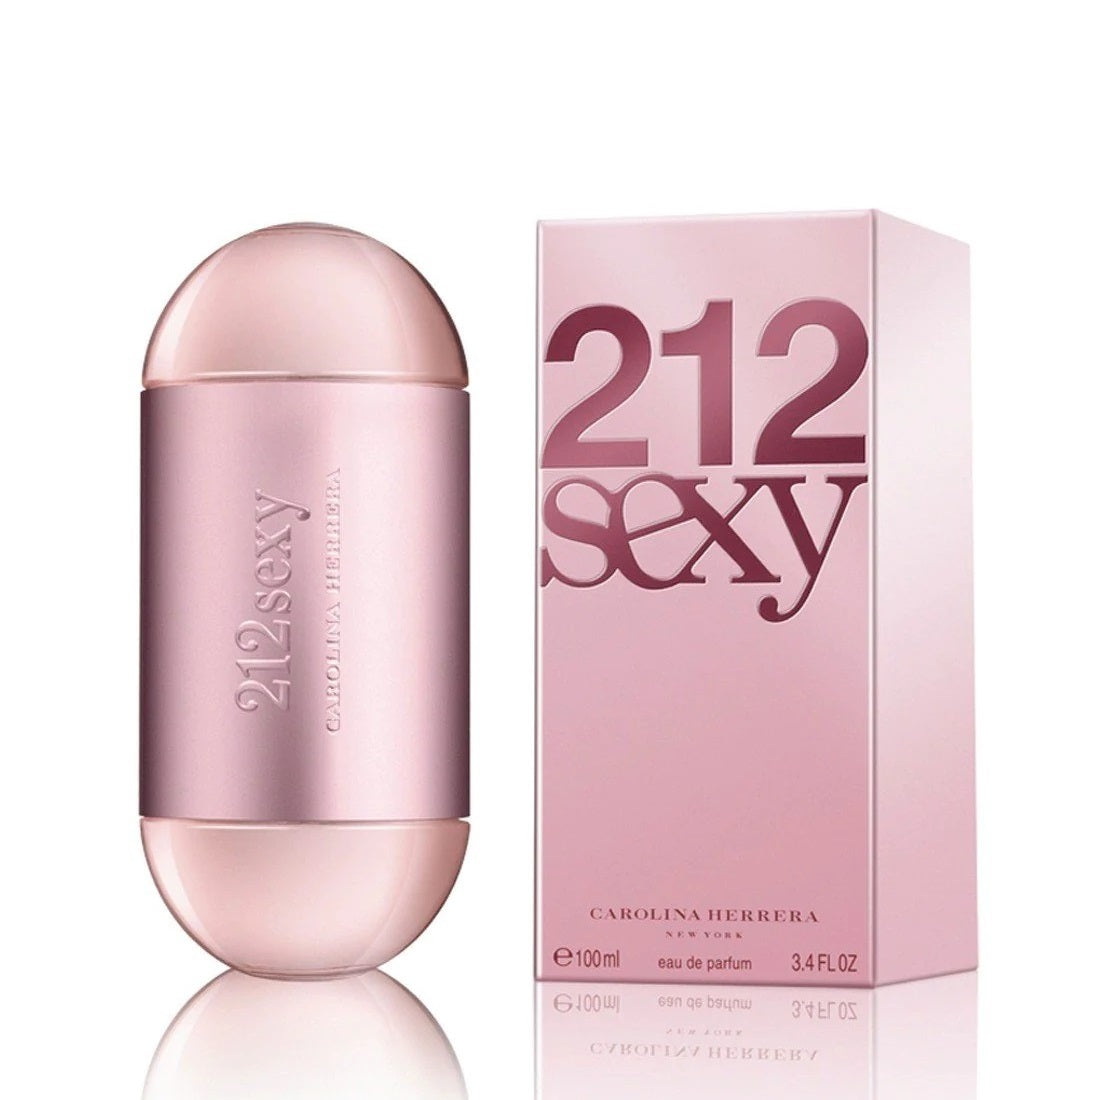 212 Sexy De Carolina Herrera - 100ML